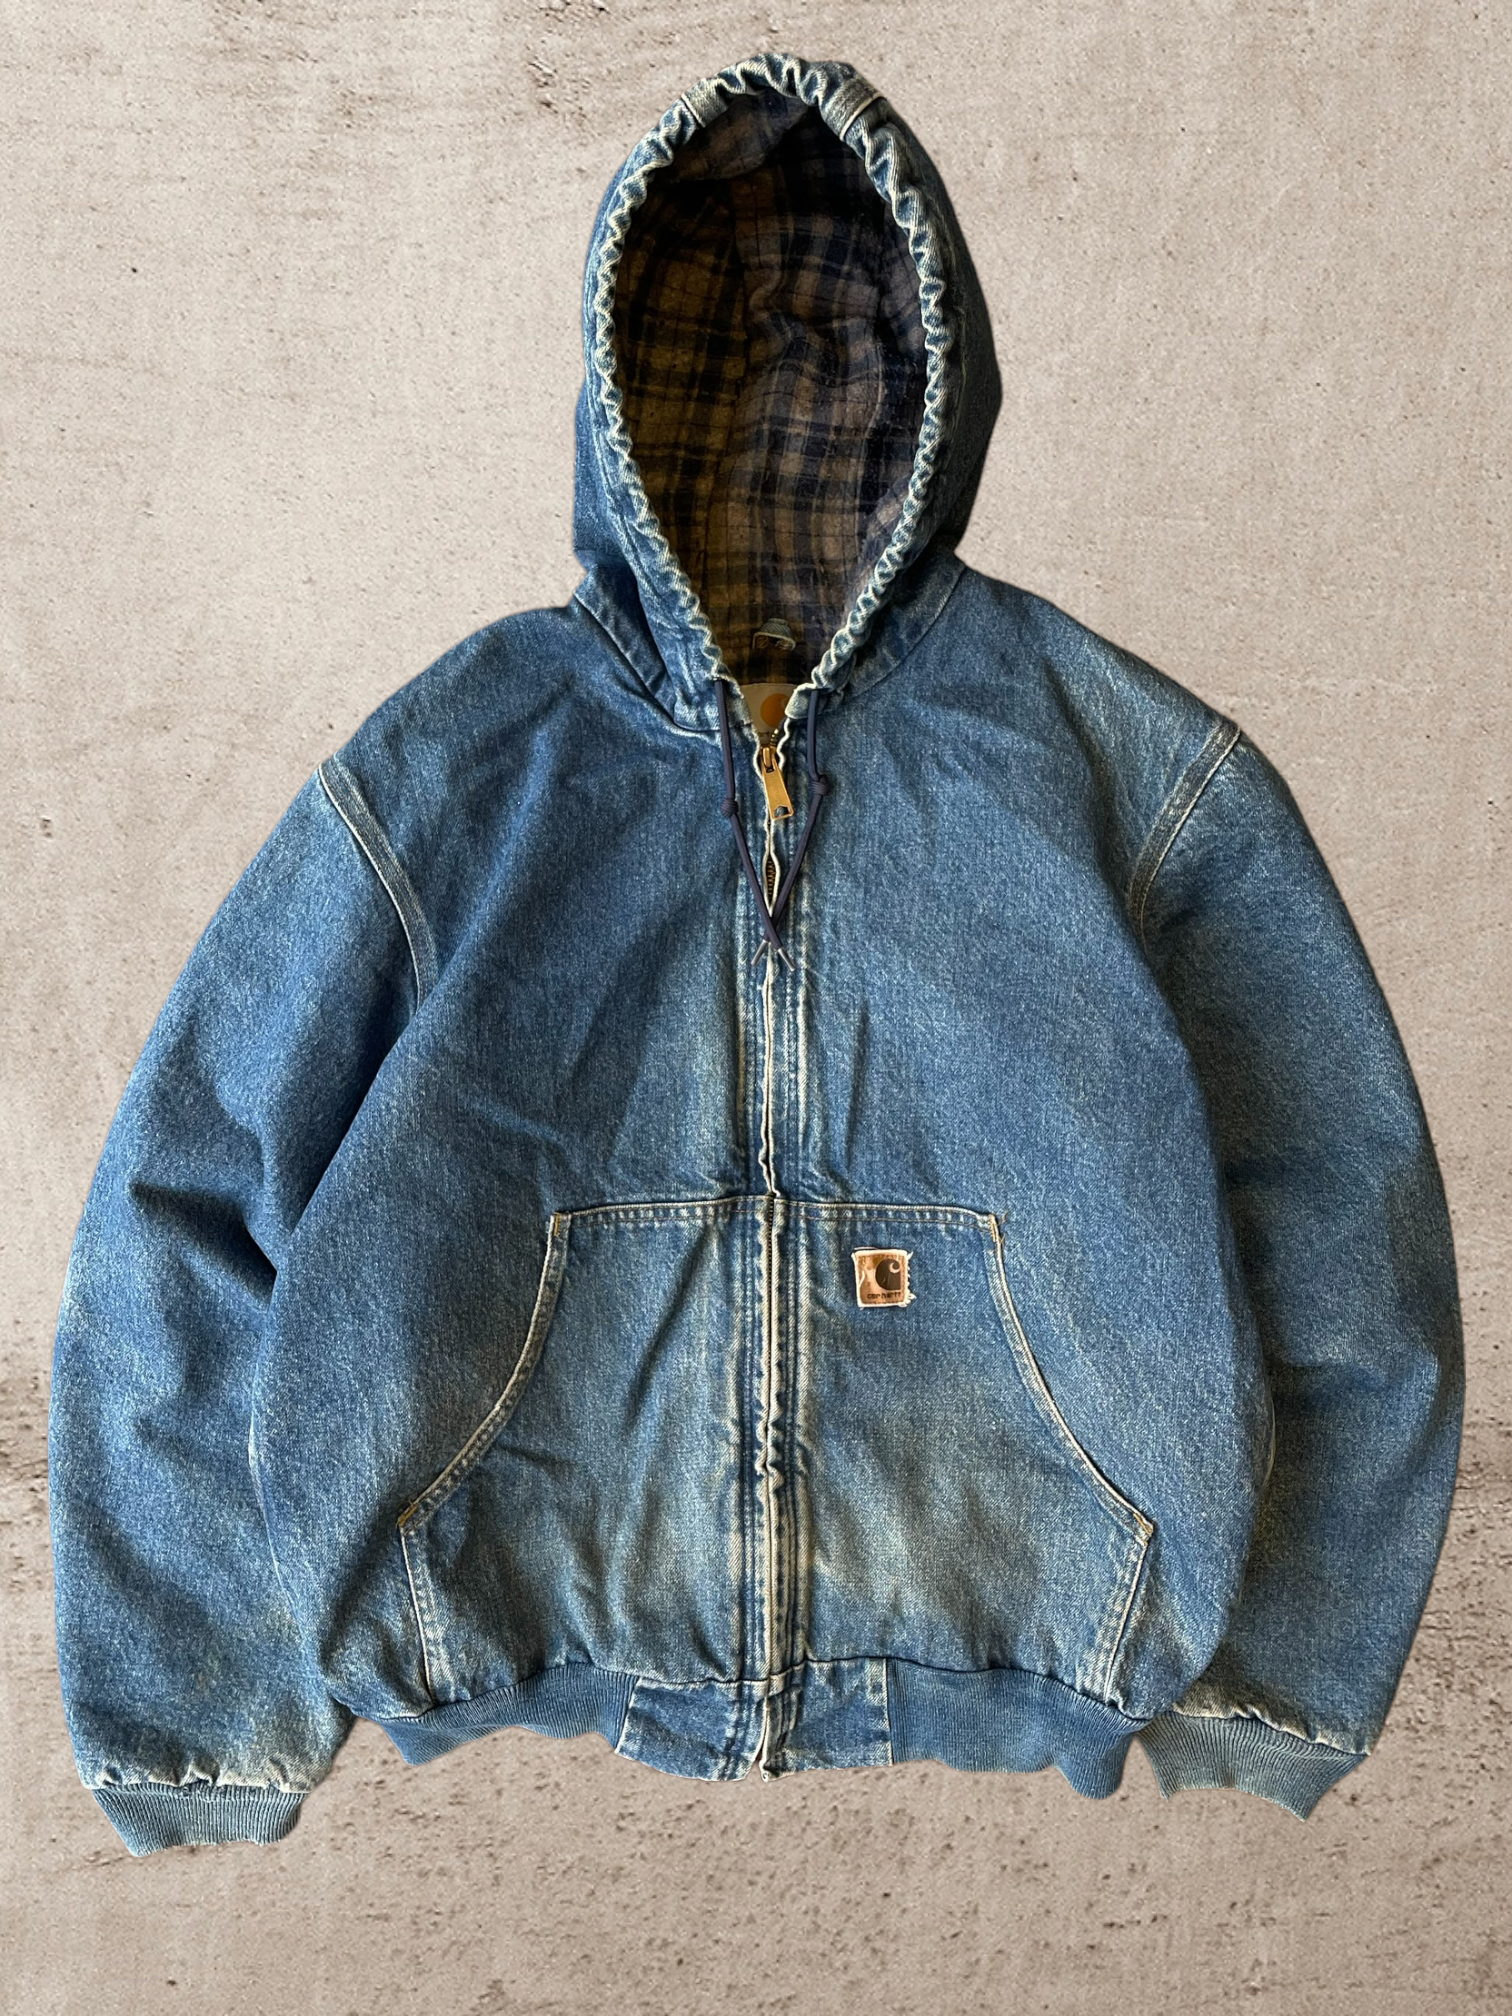 90s Carhartt Denim Hooded Jacket - Large